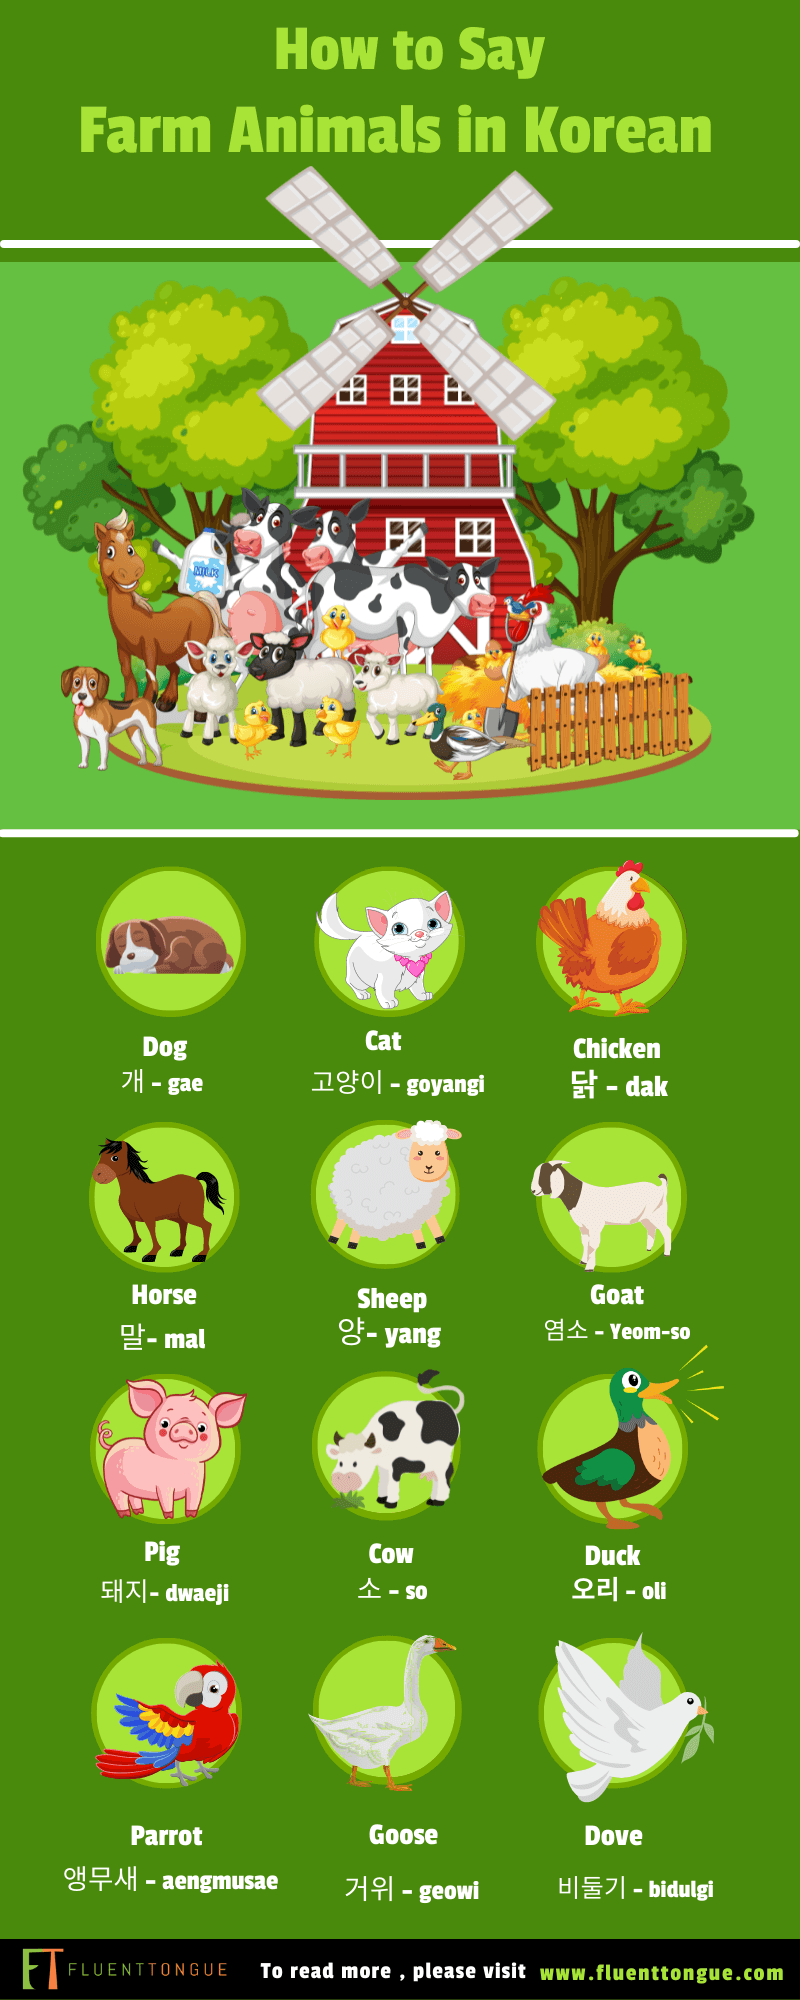 animals in Korean -farm animals 